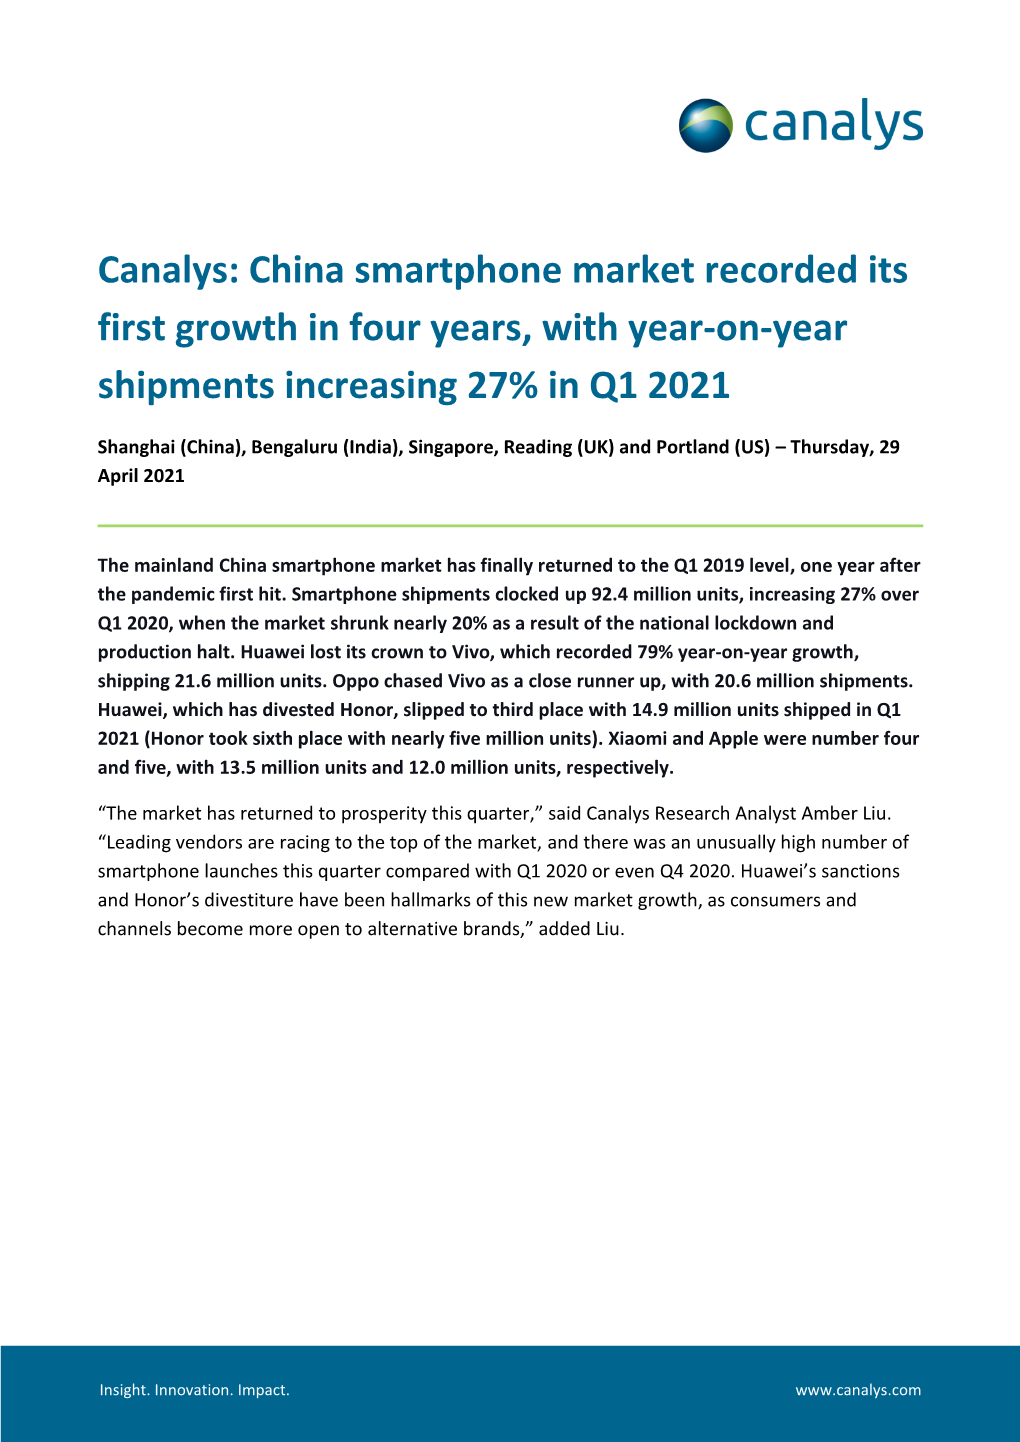 China Smartphone Market Q1 2021